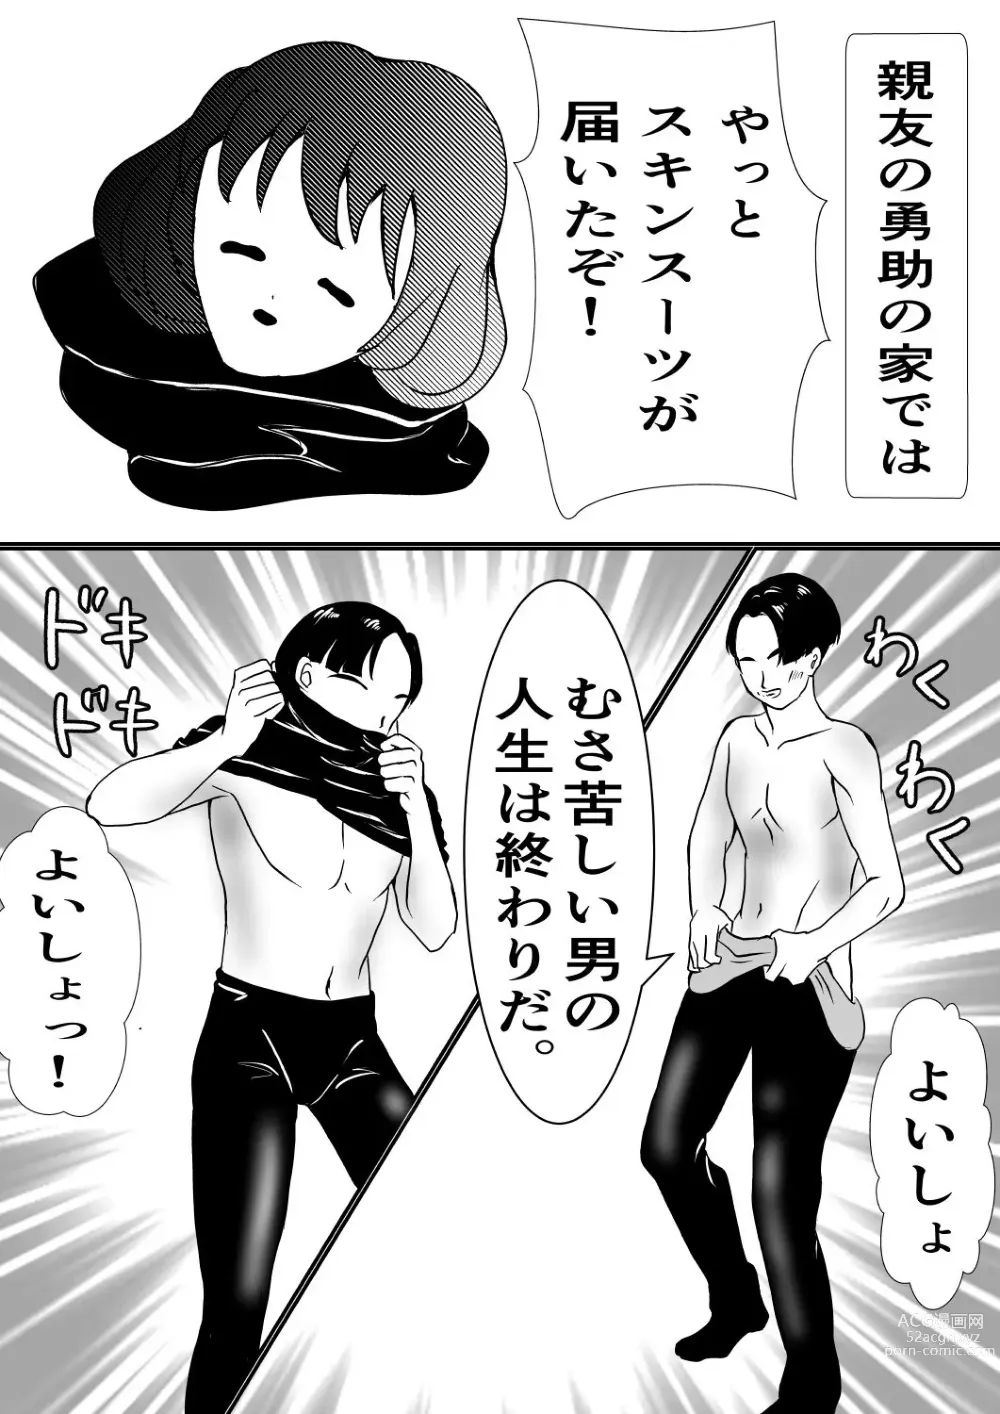 Page 3 of doujinshi 皮をかぶった親友が最高のセフレになった話。